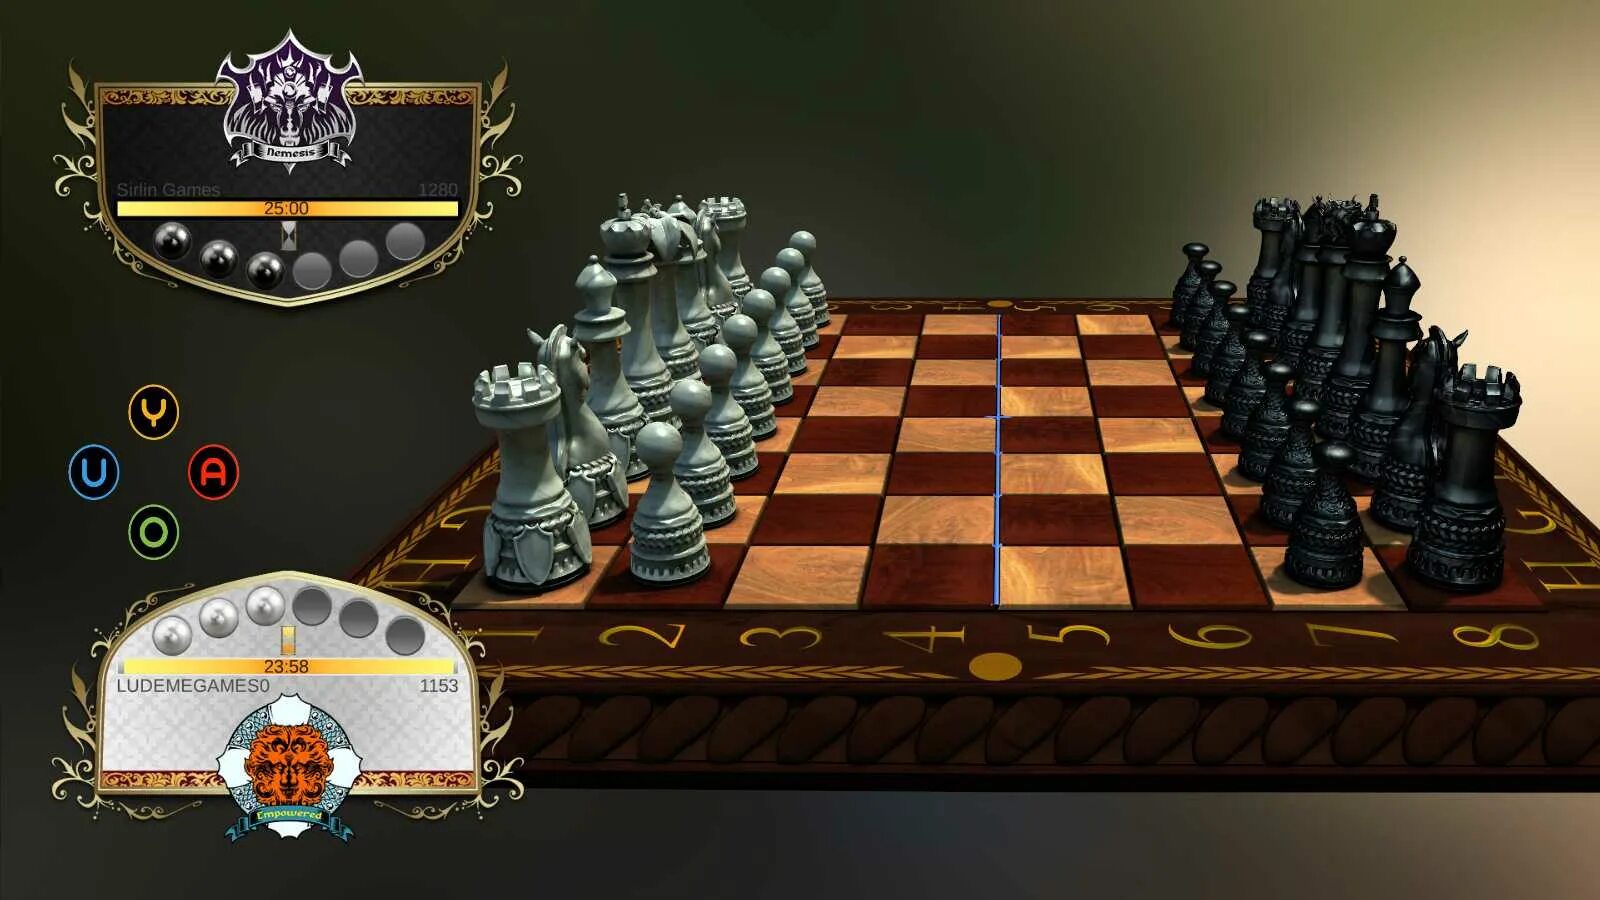 Игра шахматы Chess. Игра шахматы игра шахматы Алиса игра шахматы. Шахматы Чесс версия 2. Необычная игра в шахматы.